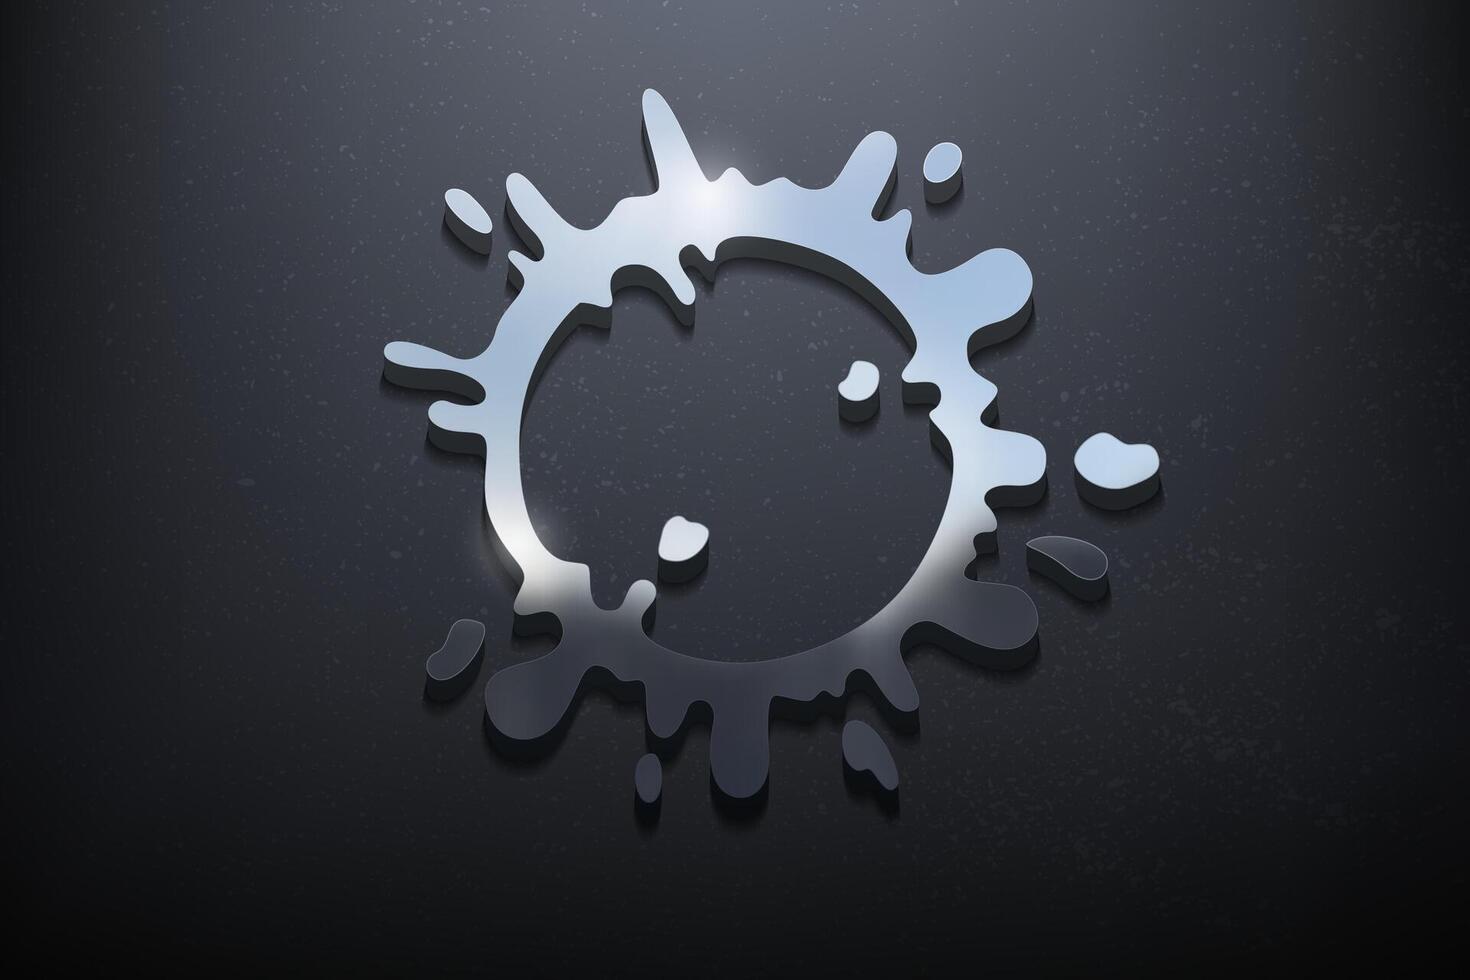 Splash 3D Logo Design, Shiny Mockup Logo with Textured Wall. Realistic Vector, Vector Illustration